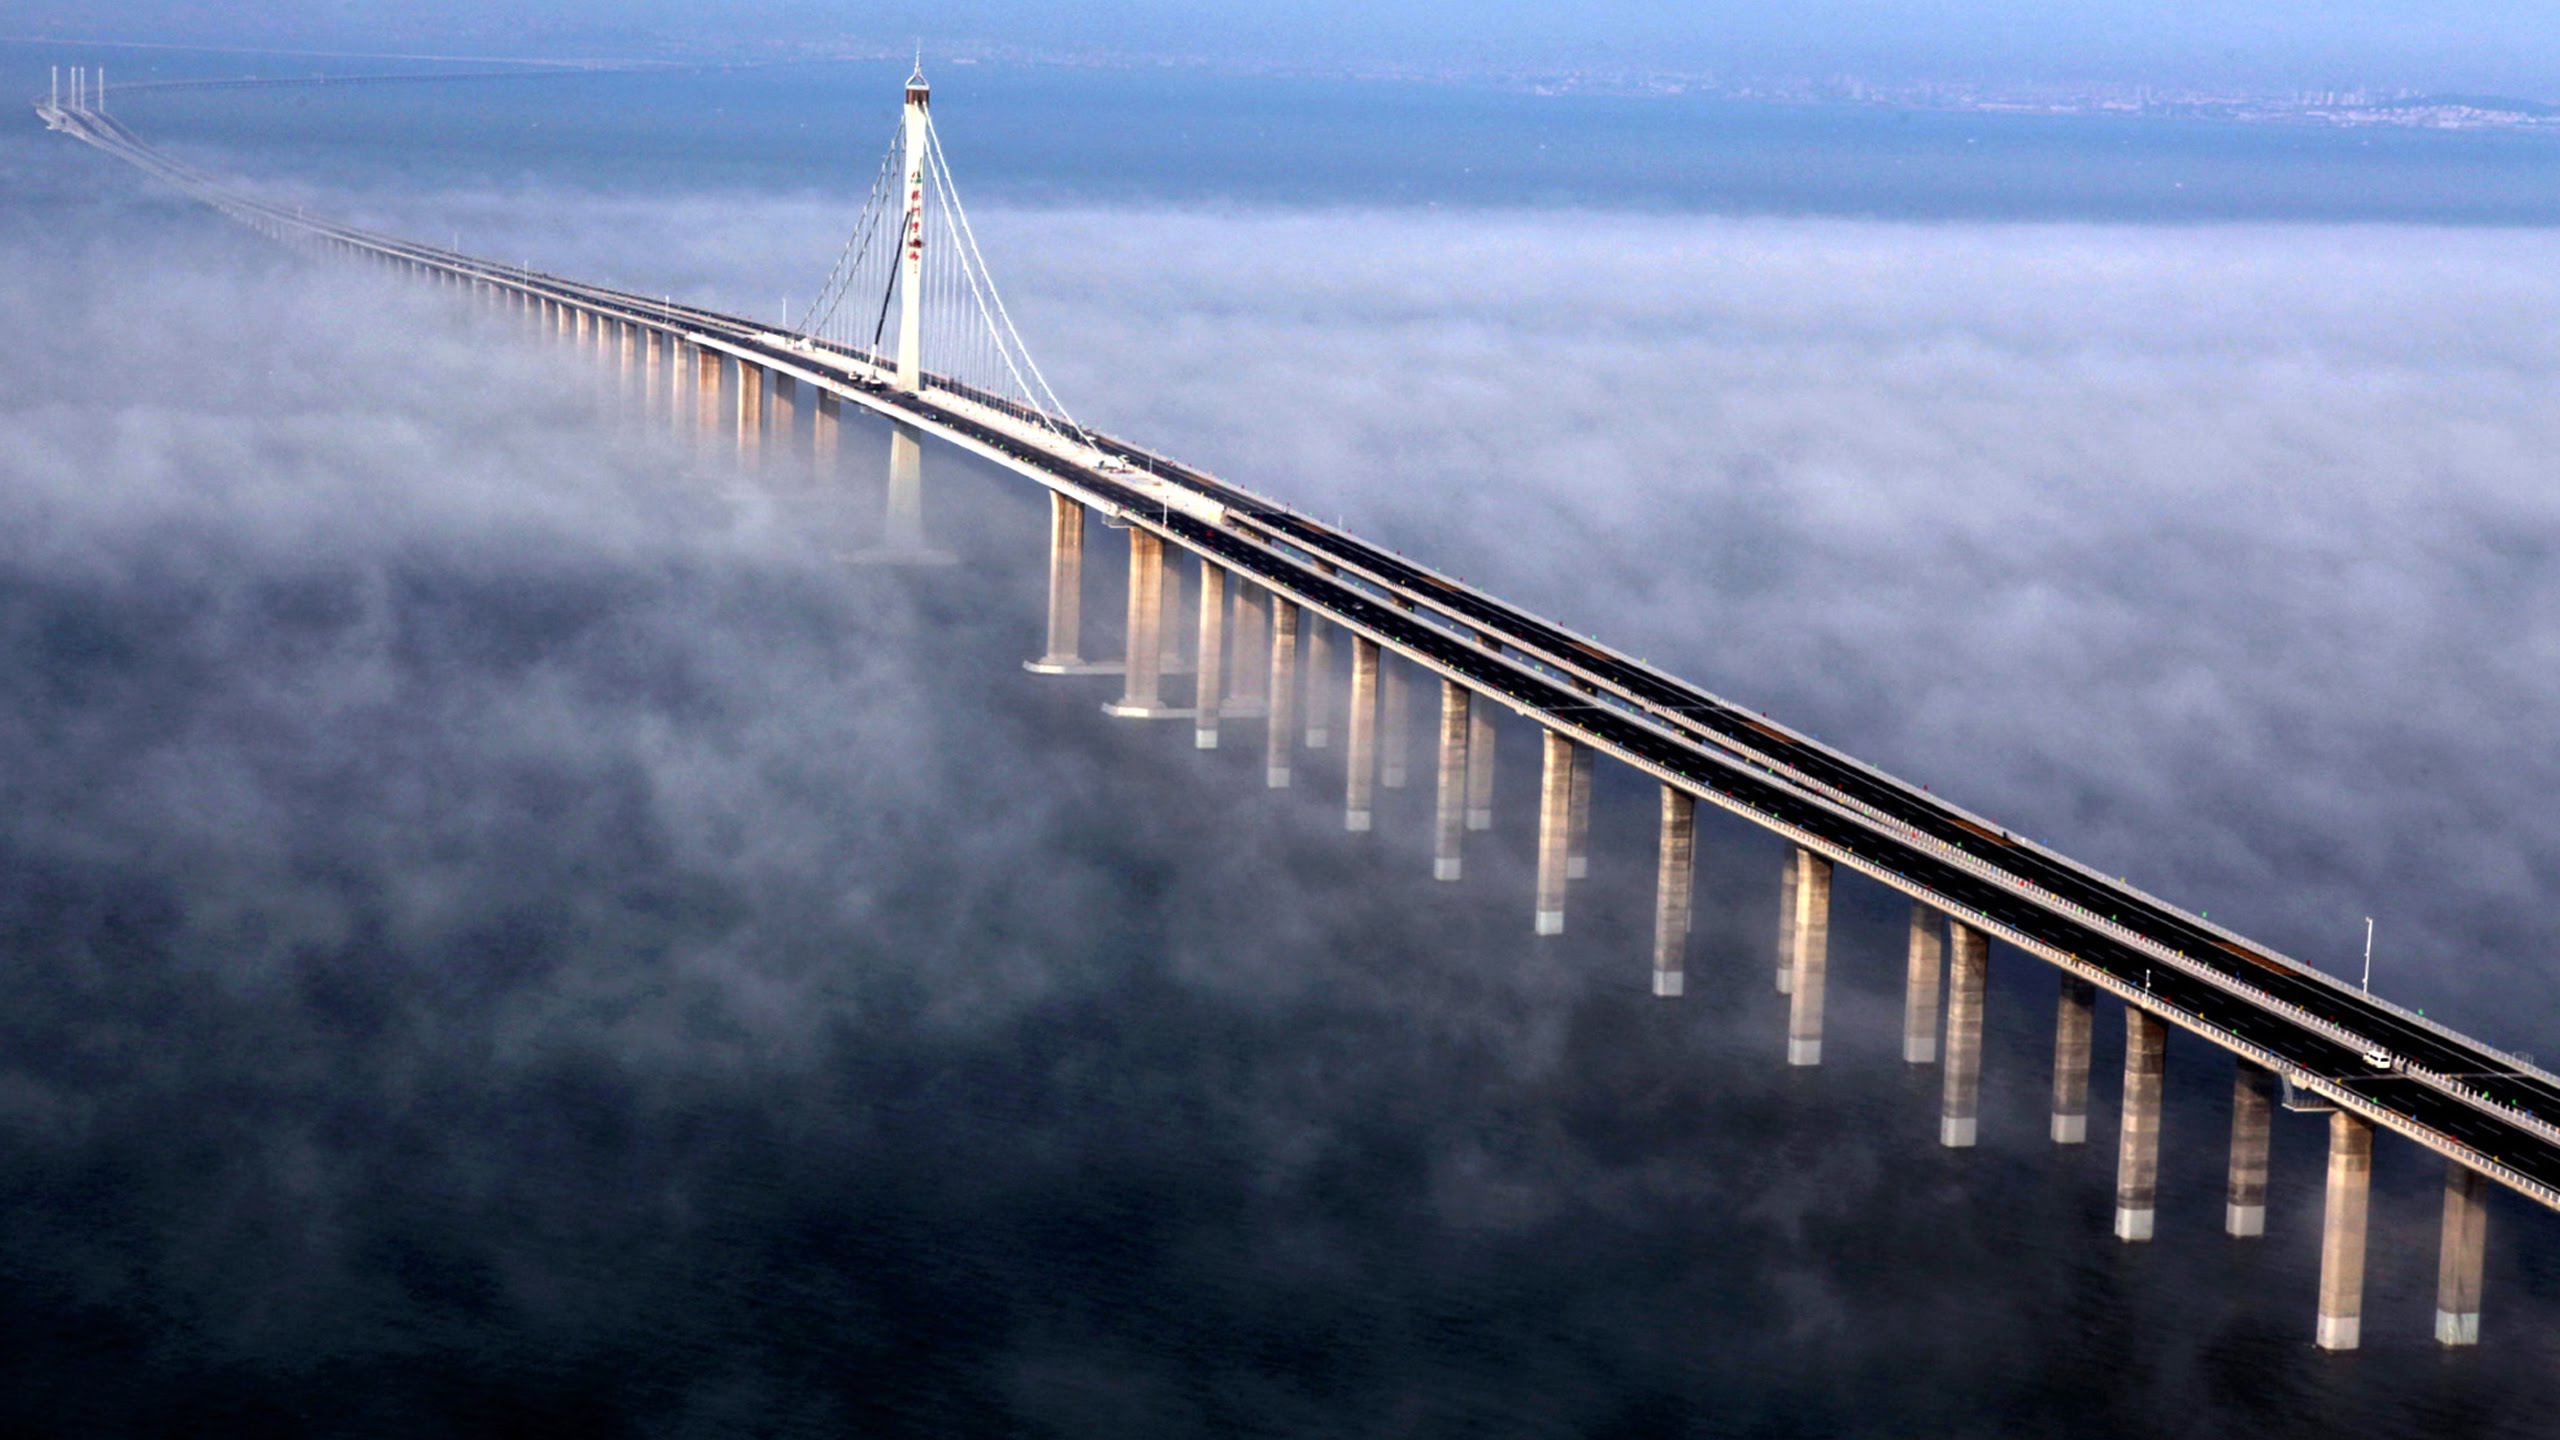 World's Longest Sea Bridge in China (26.4 miles long) - YouTube